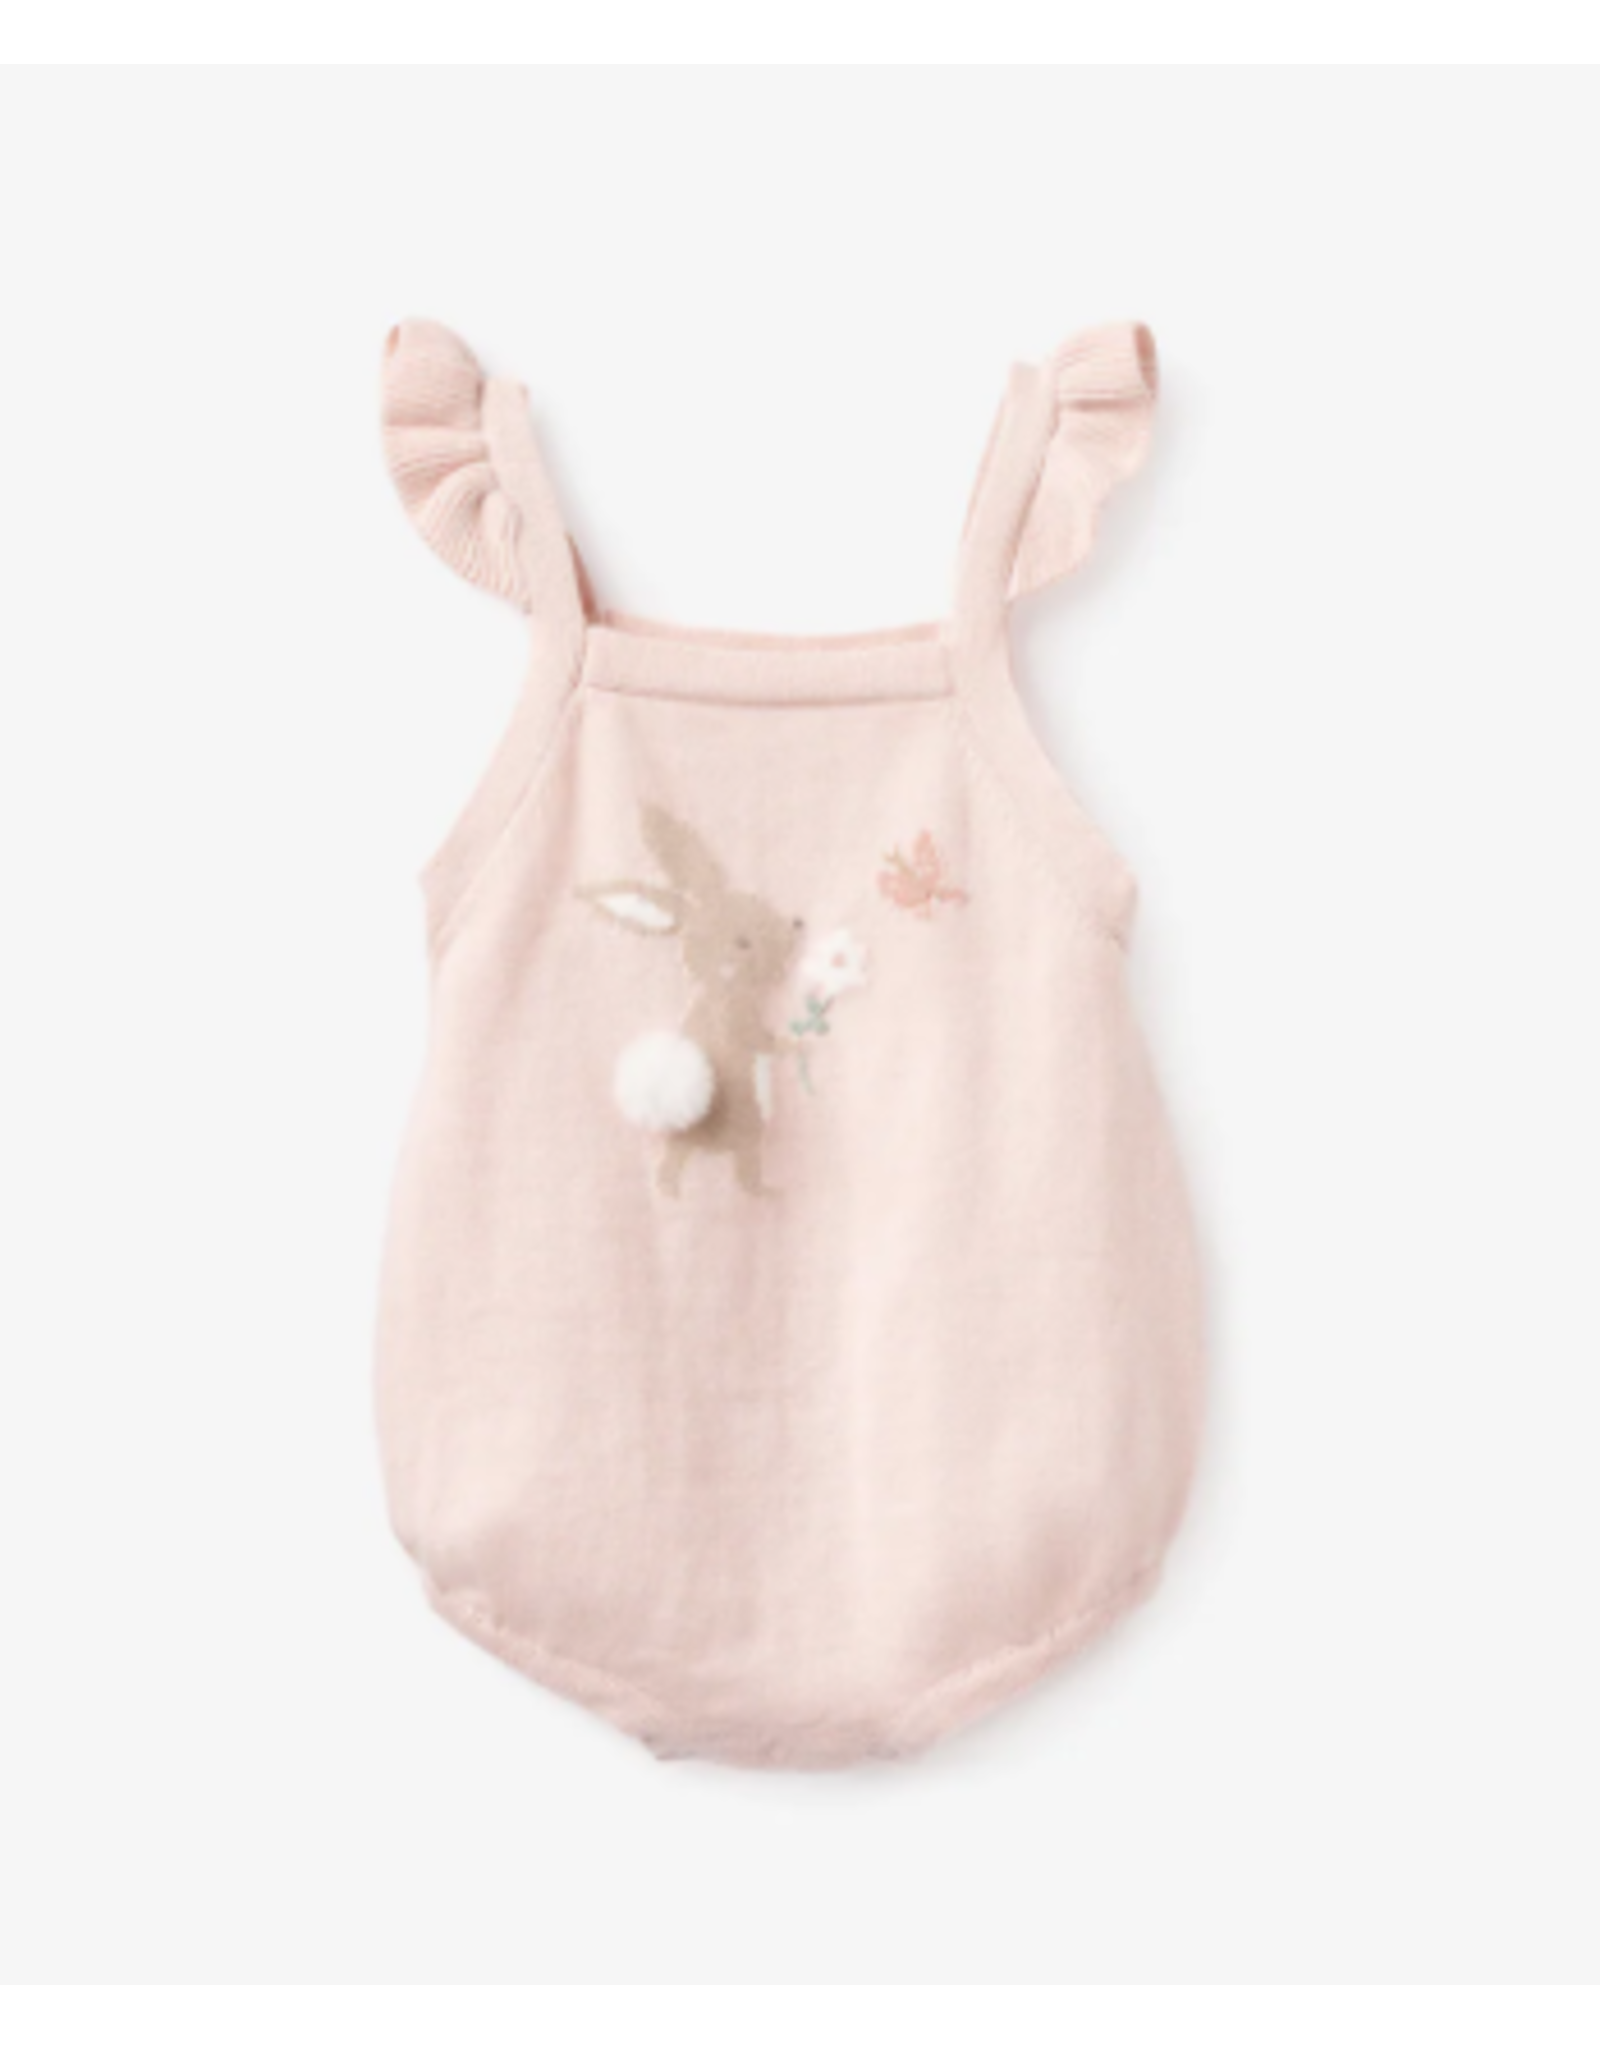 Elegant Baby Garden Picnic Bunny Knit Bubble, 3-6 mo.